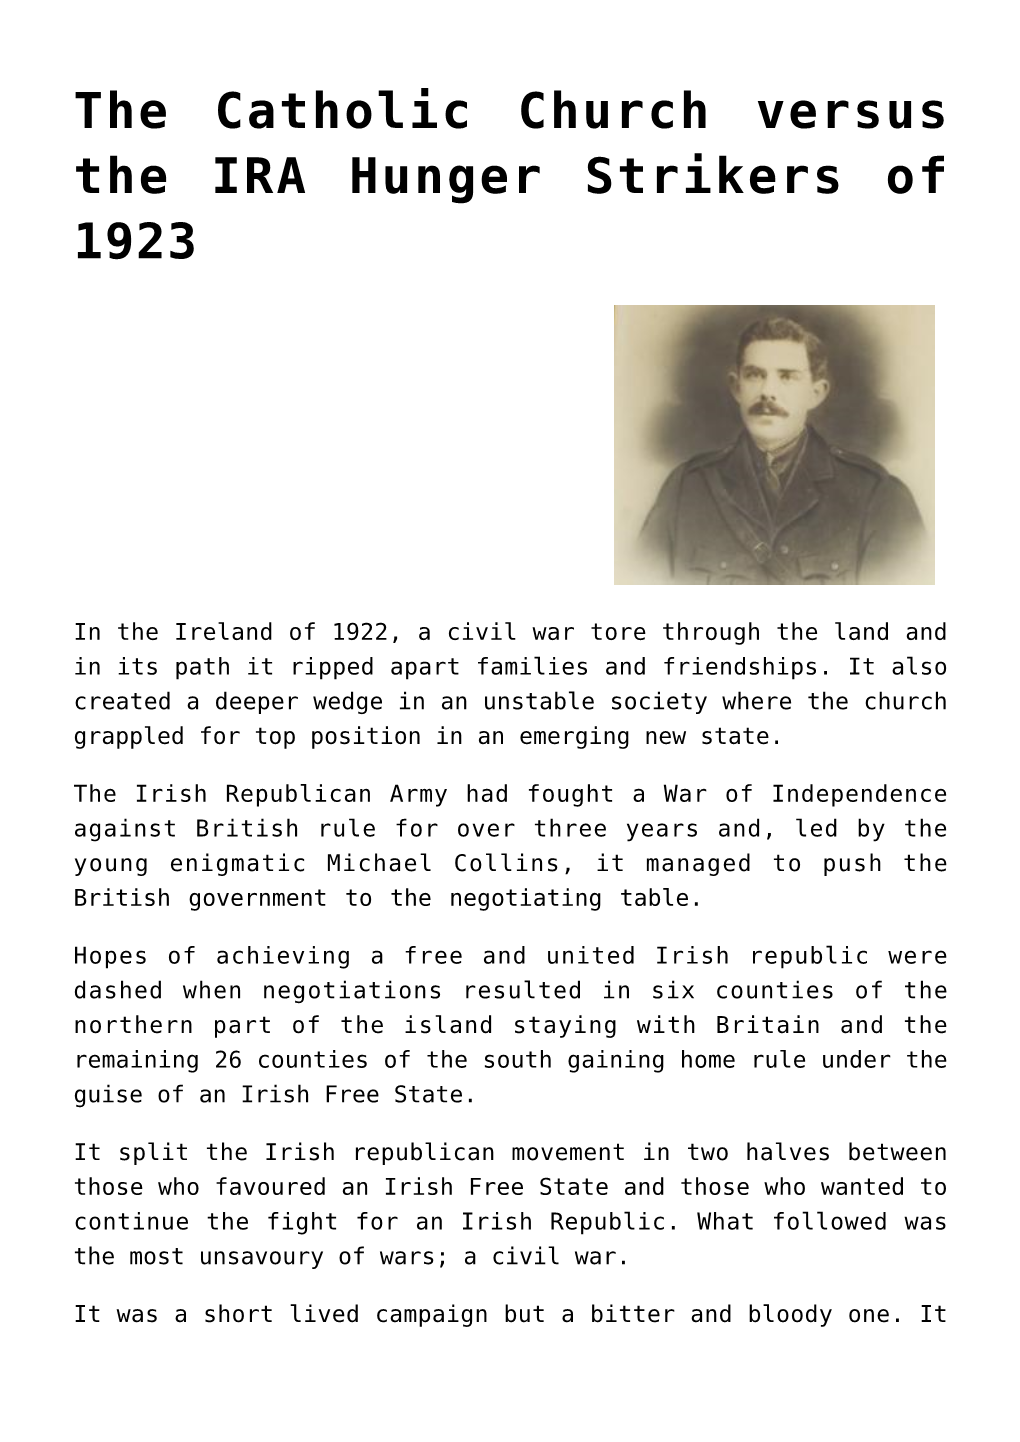 The Catholic Church Versus the IRA Hunger Strikers of 1923